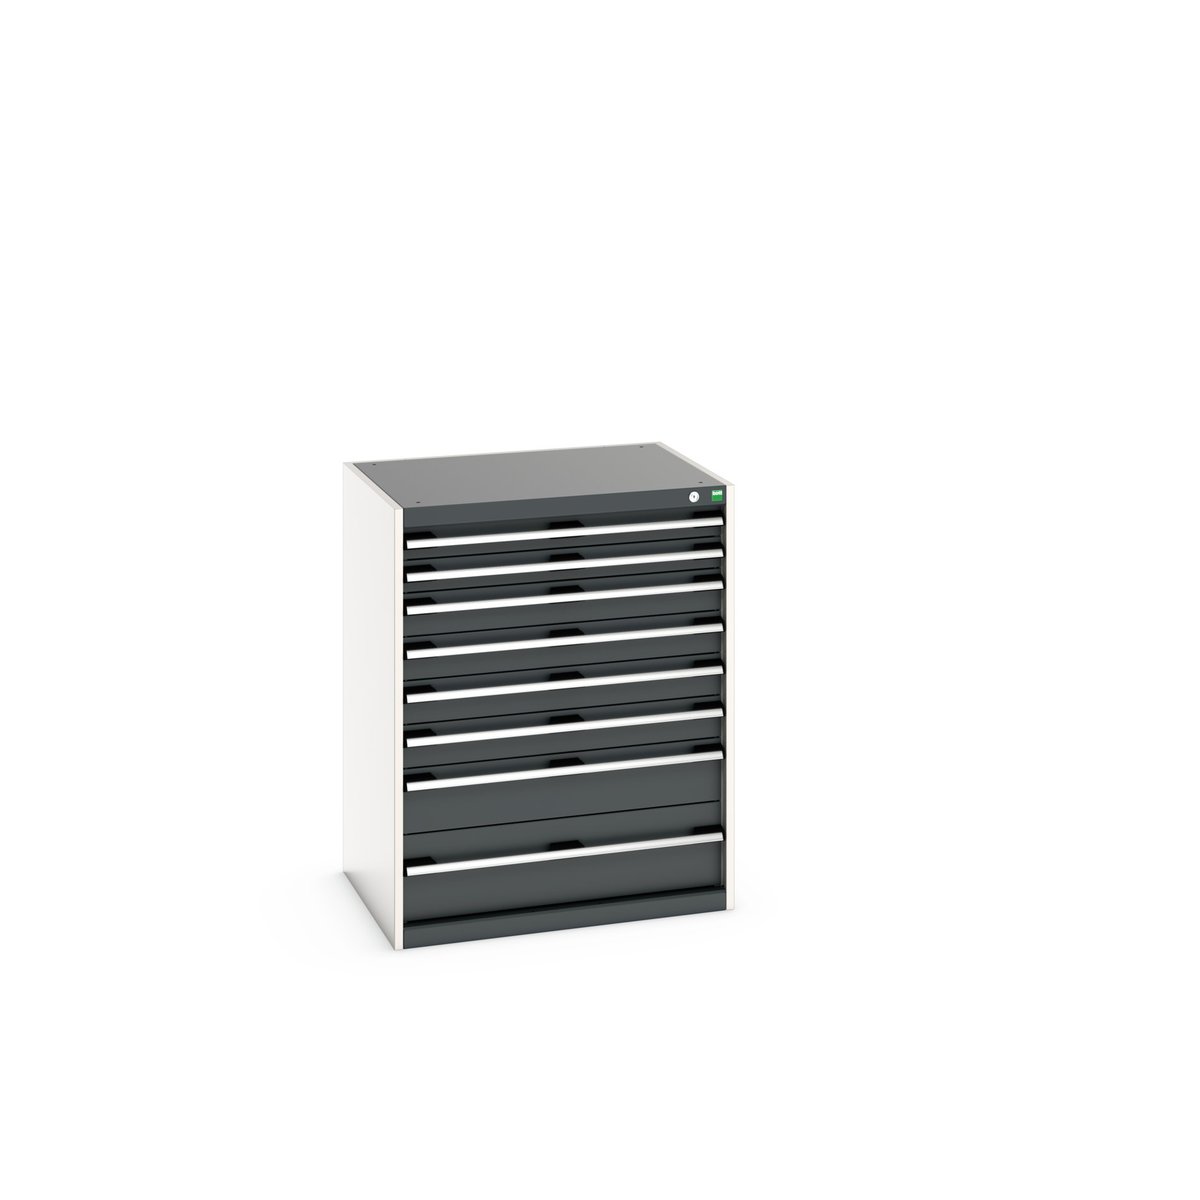 40020143. - cubio drawer cabinet